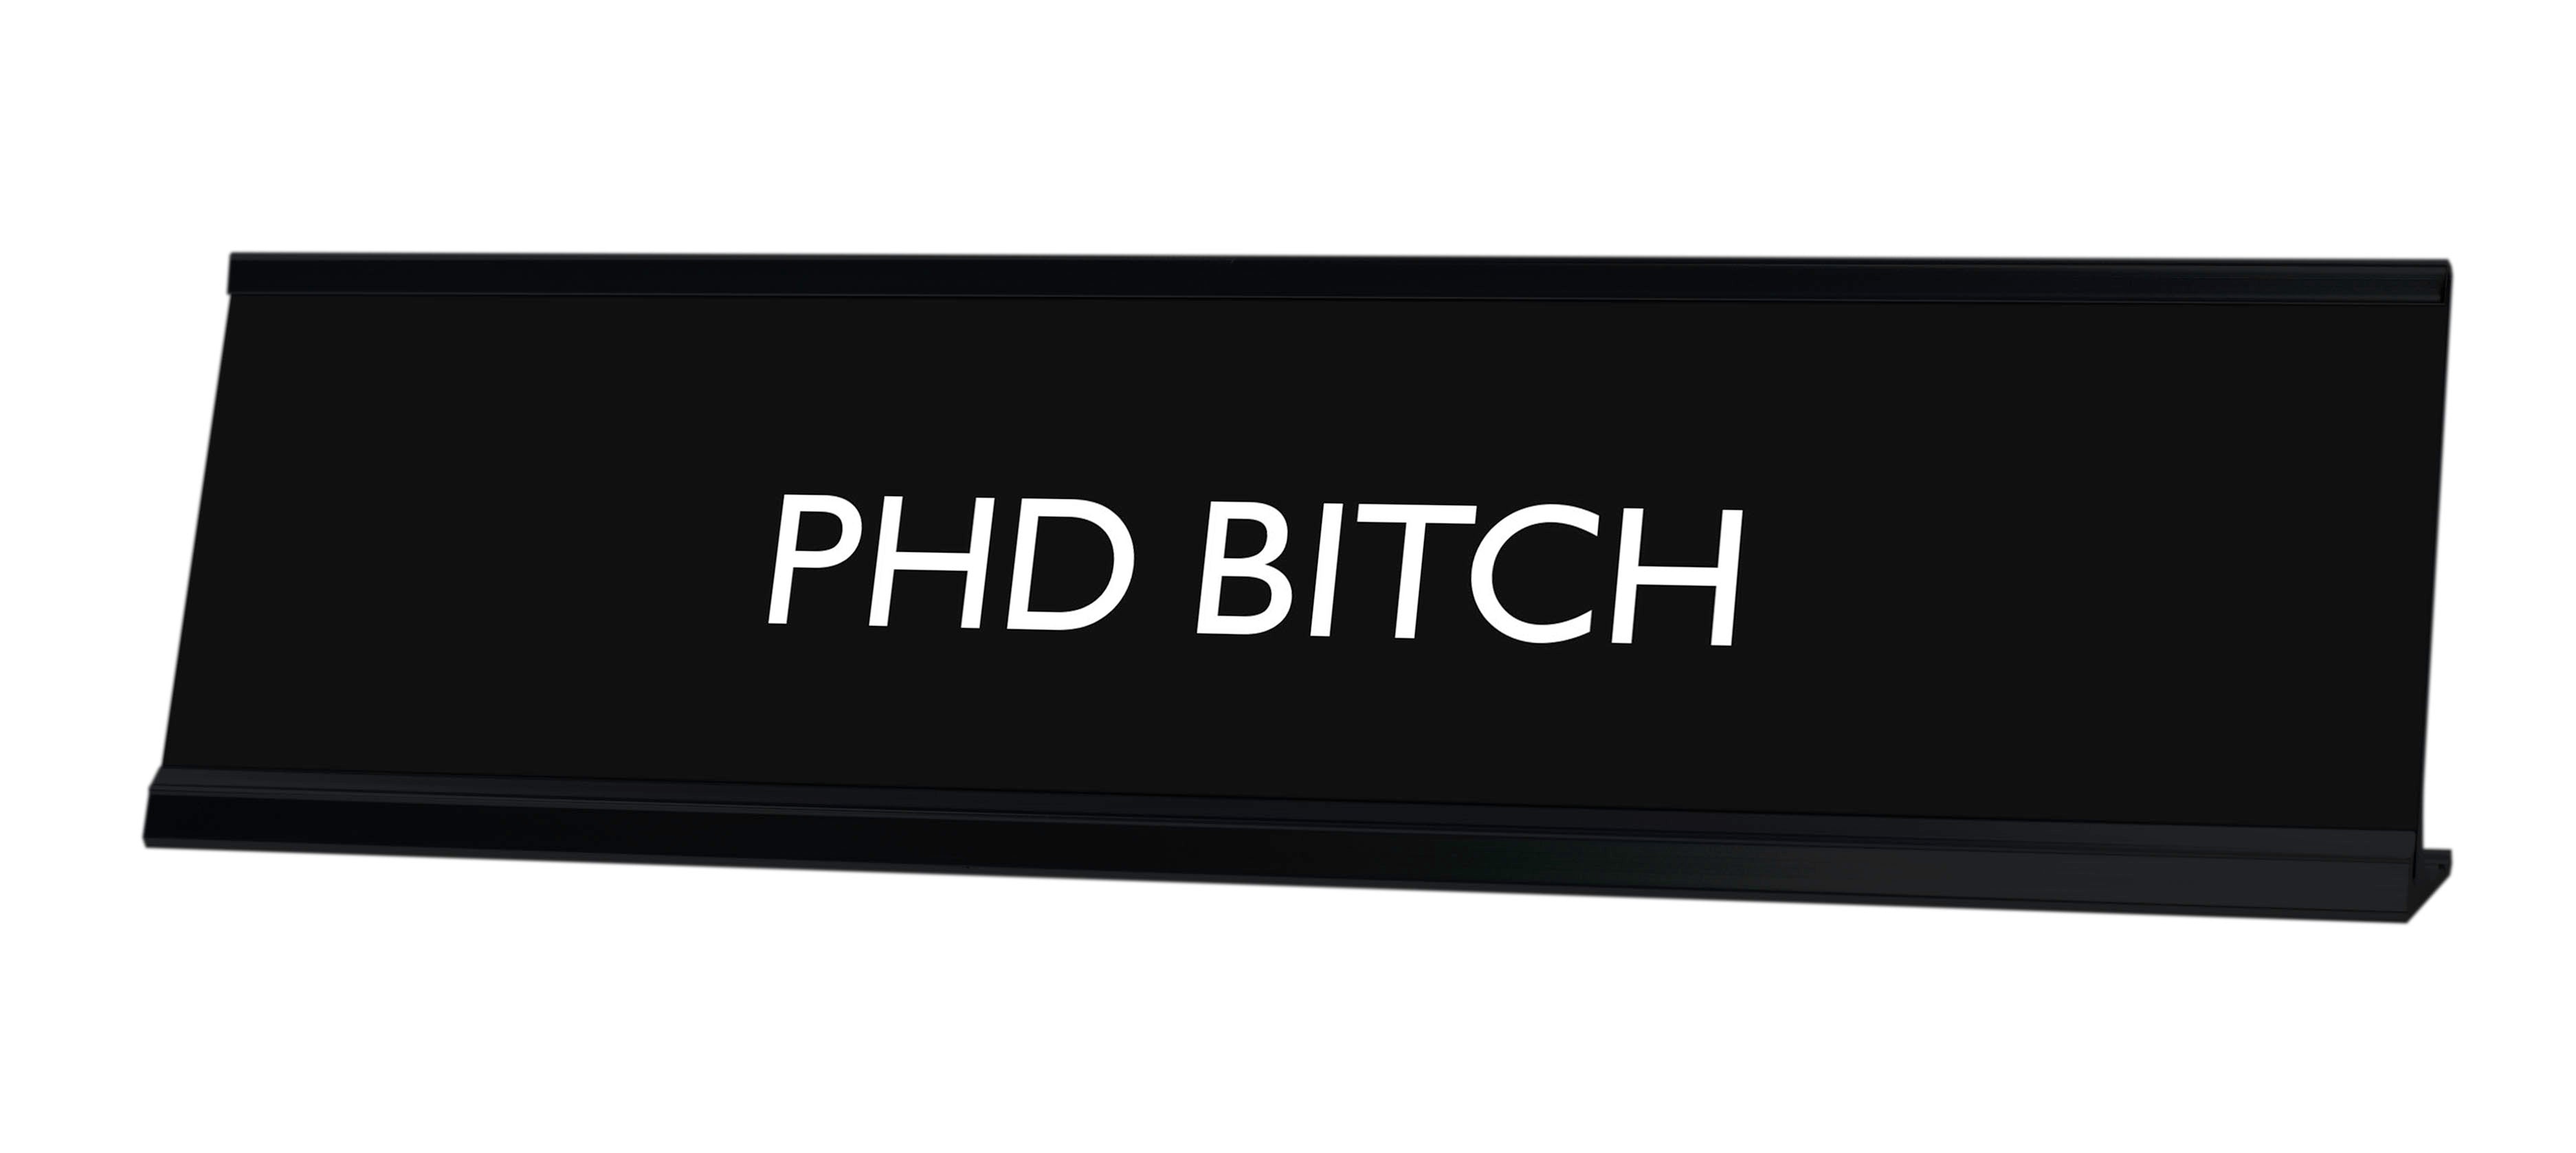 PhD BITCH Novelty Desk Sign